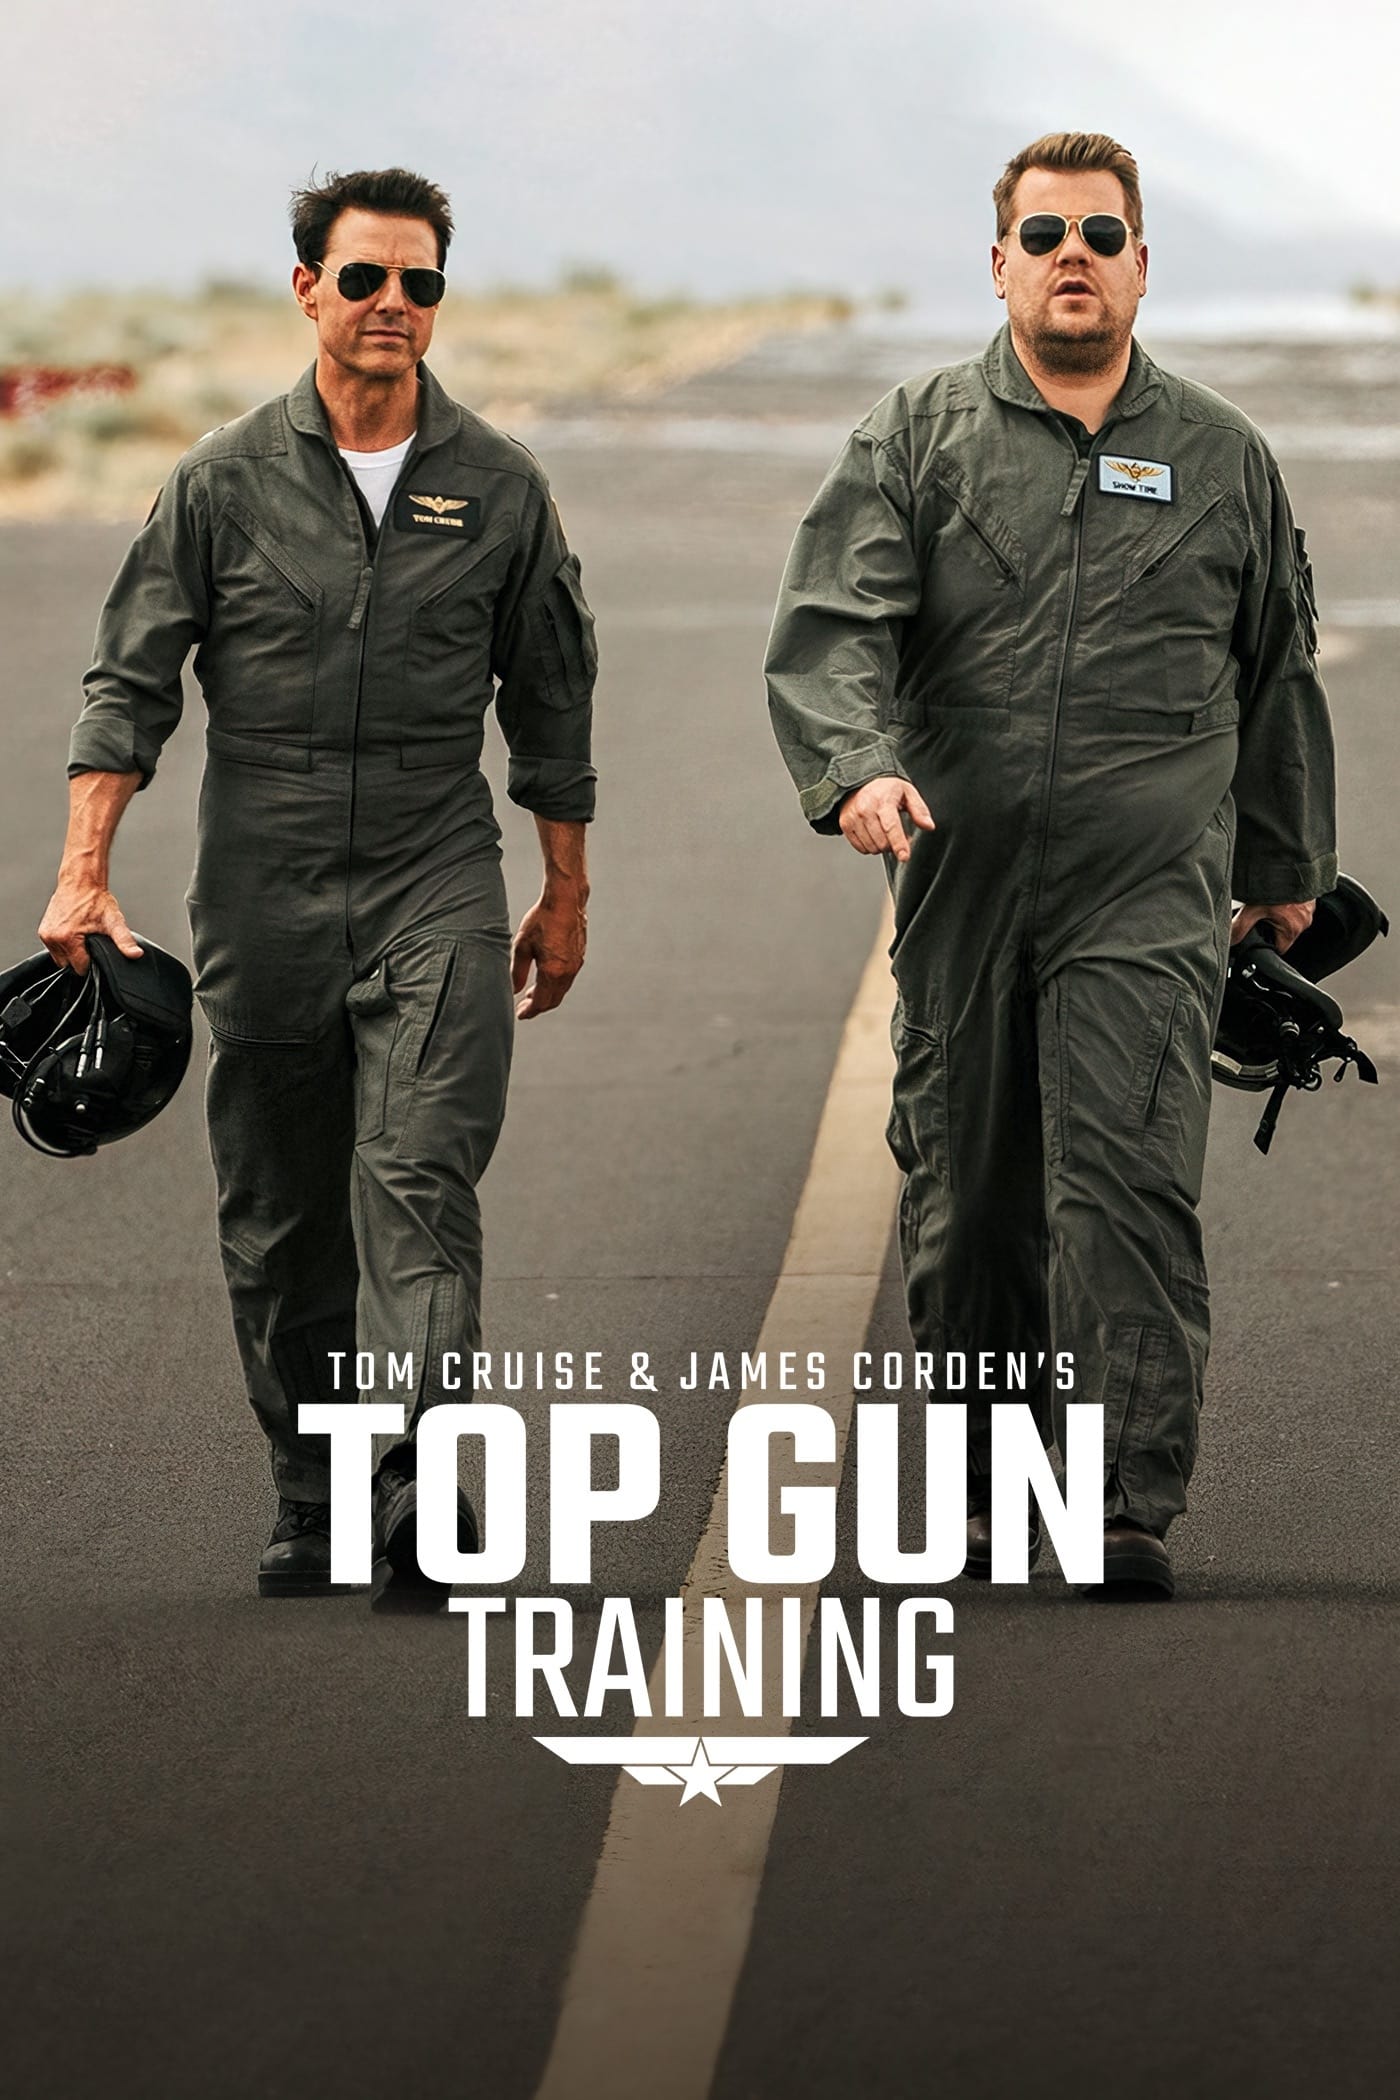 James Corden's Top Gun Training with Tom Cruise (2022)